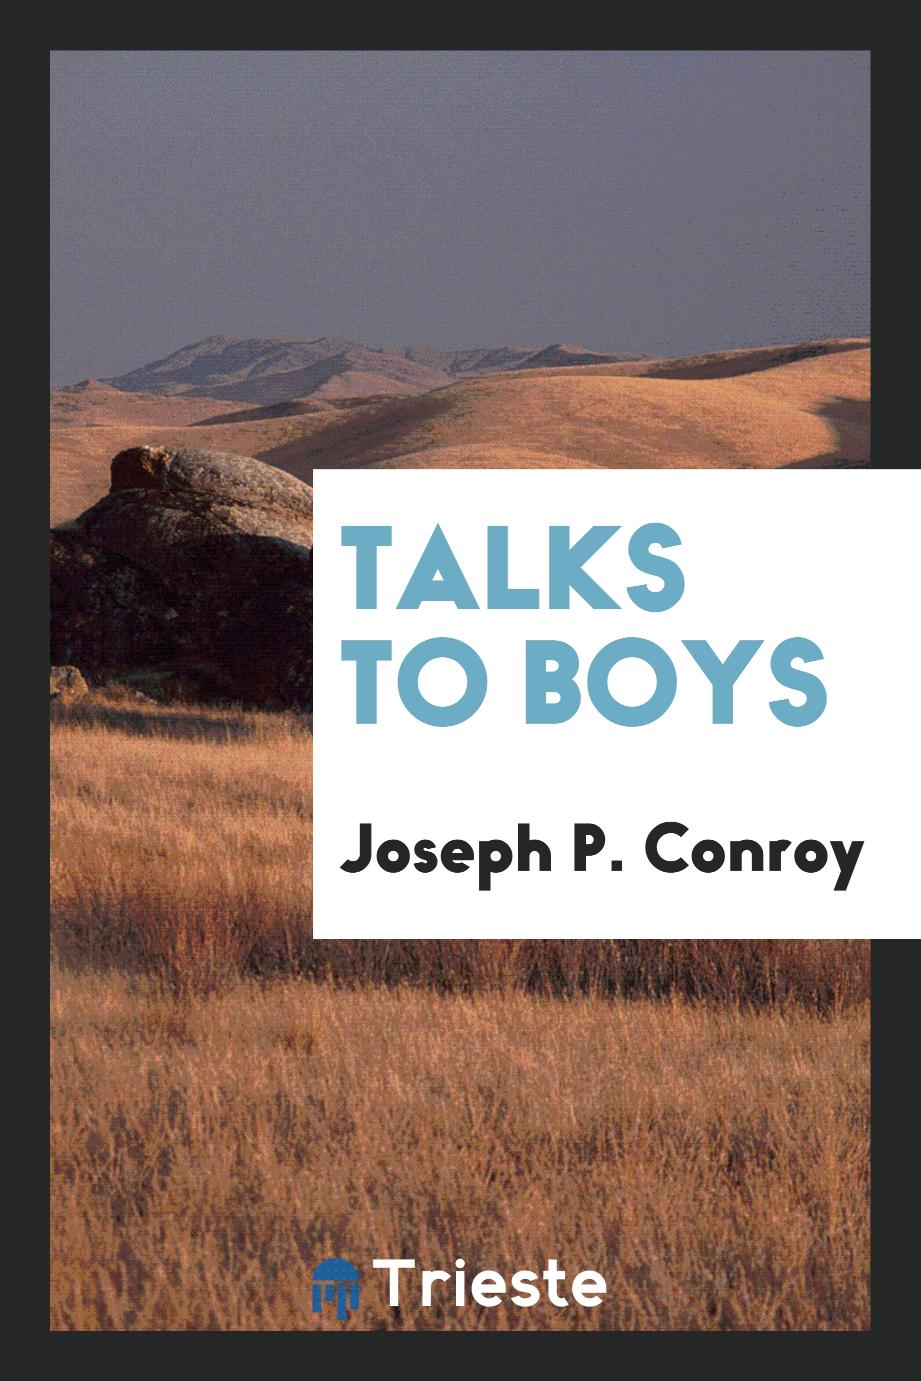 Talks to boys